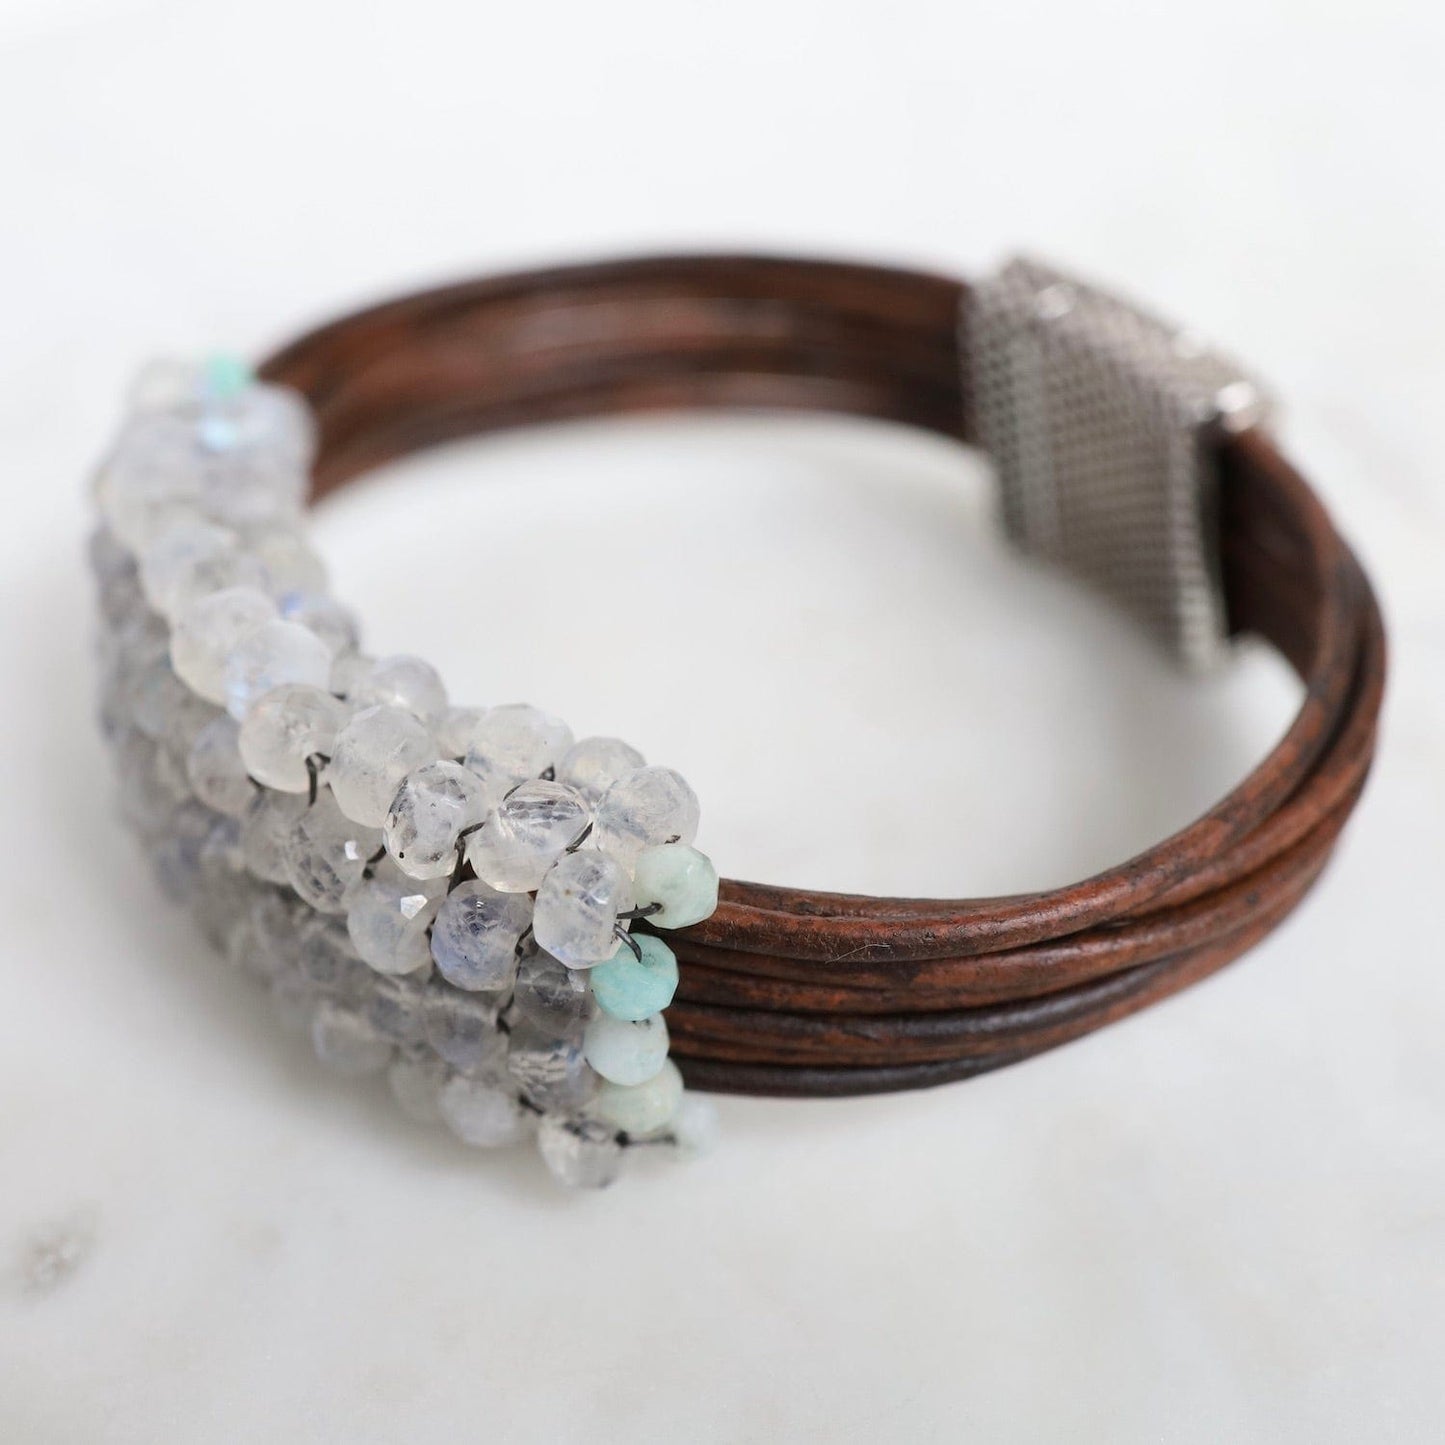 BRC-JM Hand Stitched Moonstone with Peruvian Opal Trim on Leather Bracelet